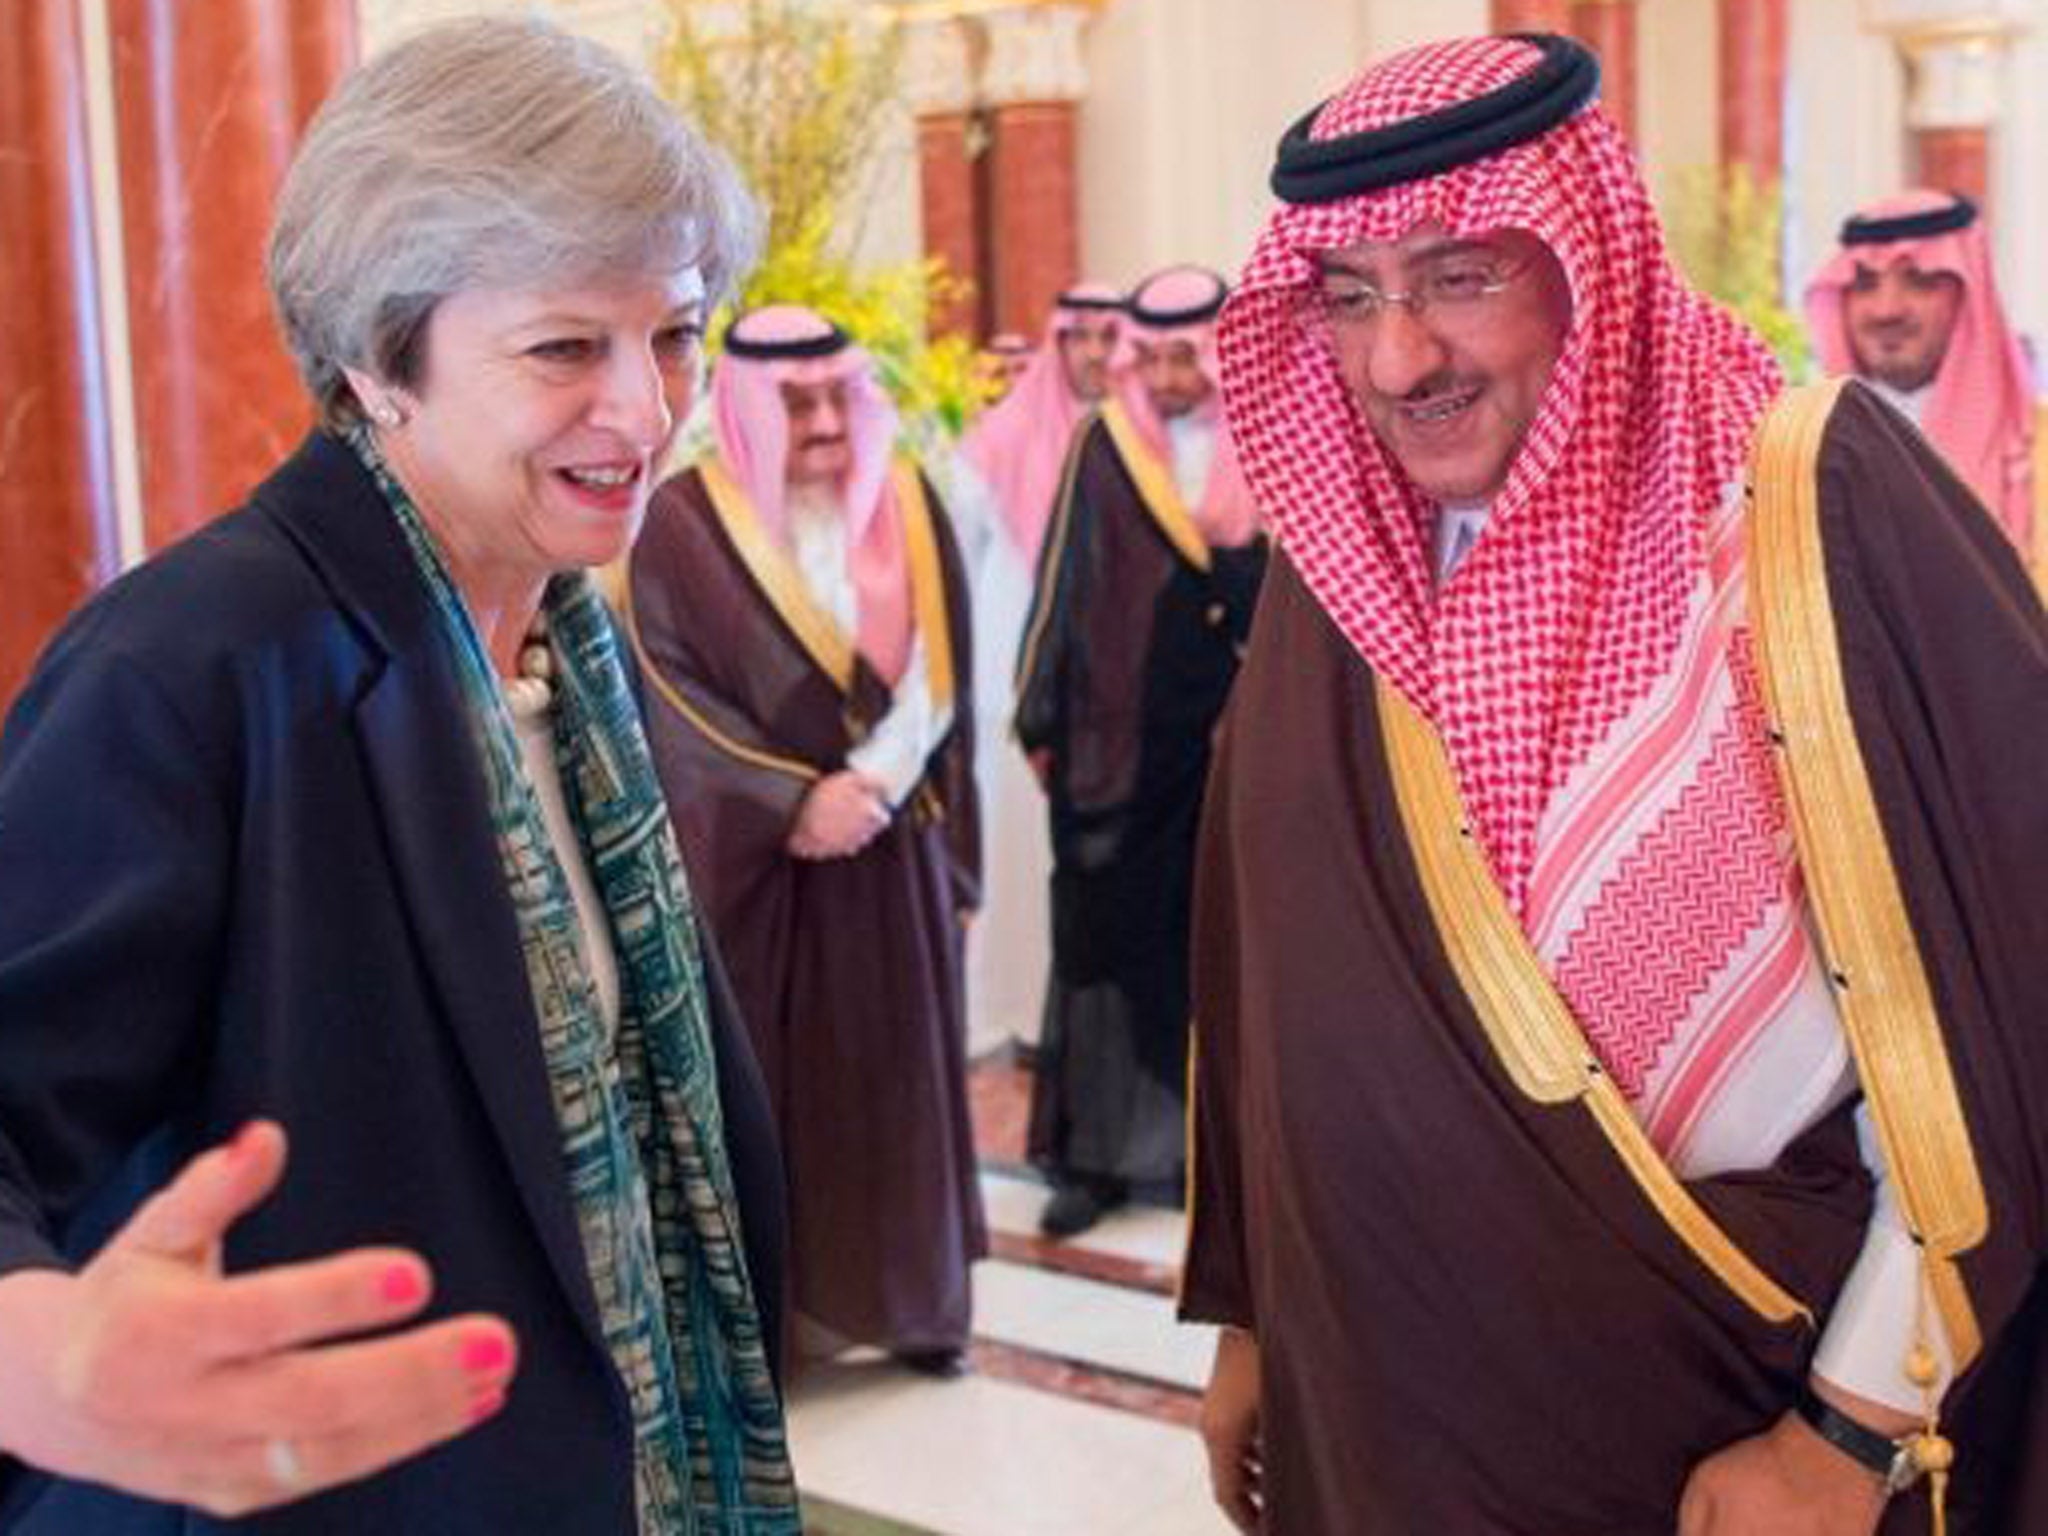 Theresa May with Saudi Crown Prince Muhammad bin Nayef in Riyadh on Wednesday